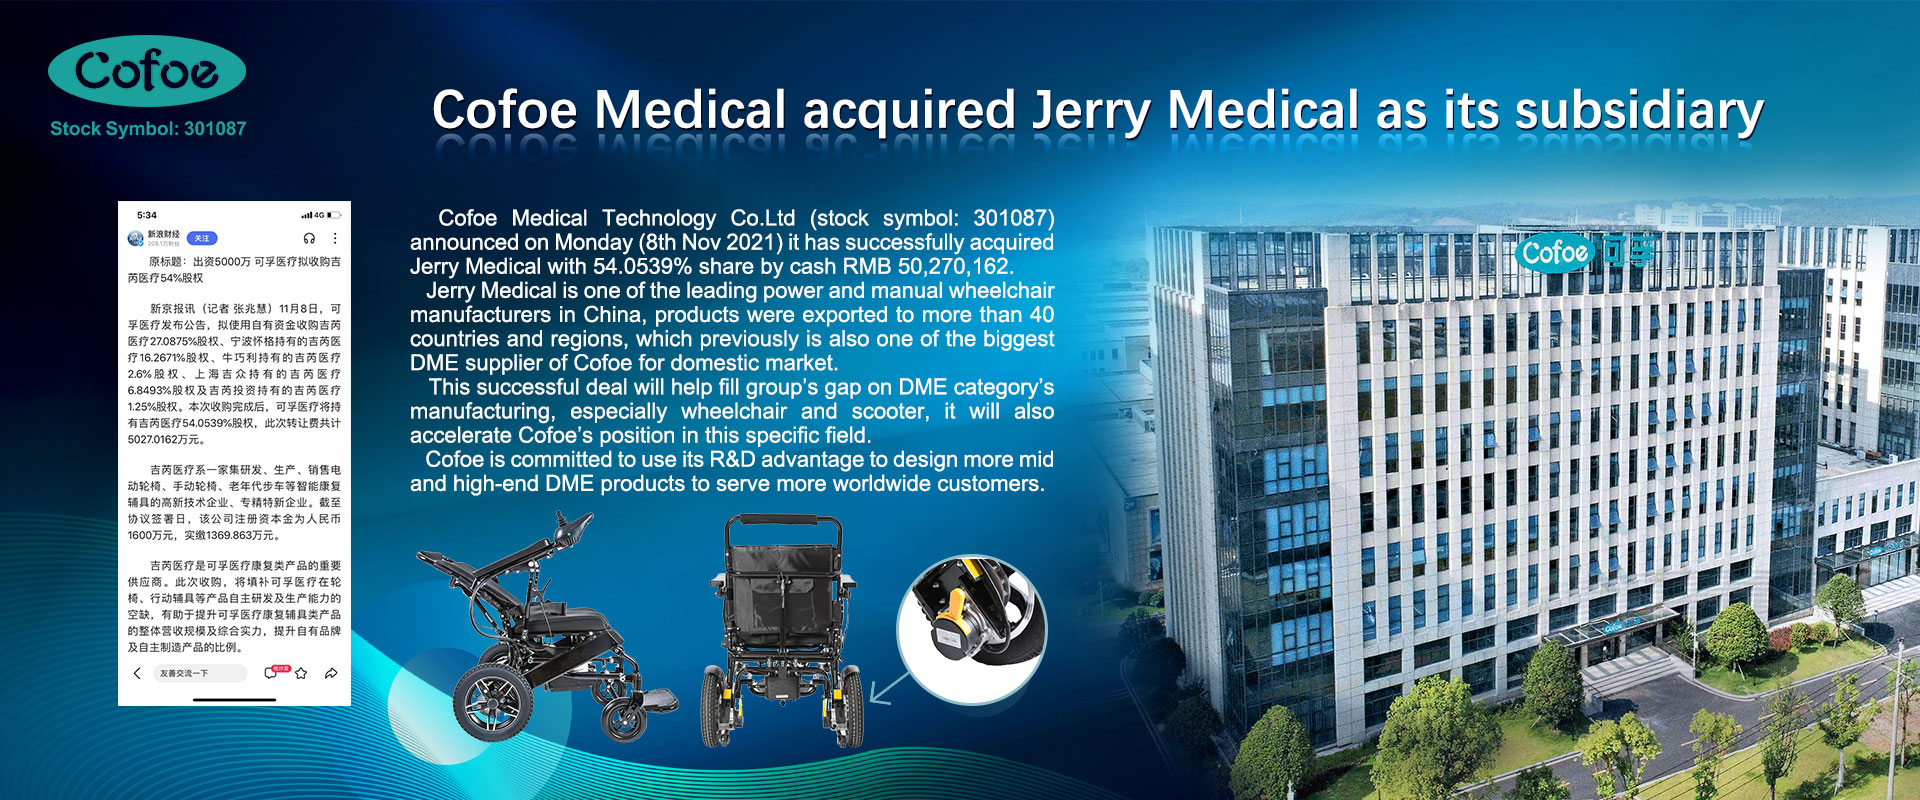 CoFoe Medical Technology Co., Ltd. Aquired Jerry Medical como sua subsidiária